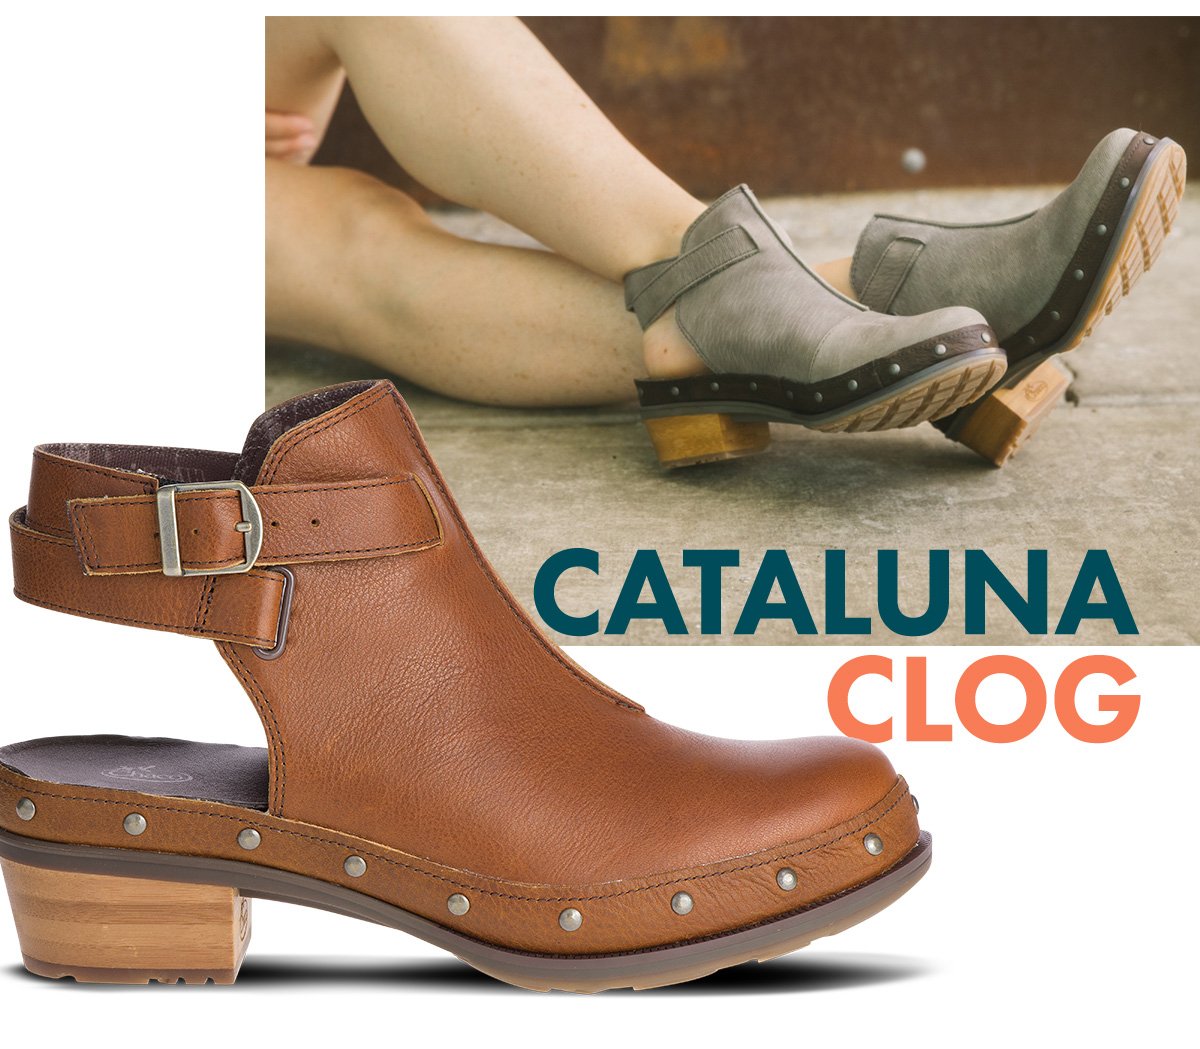 chaco cataluna clog